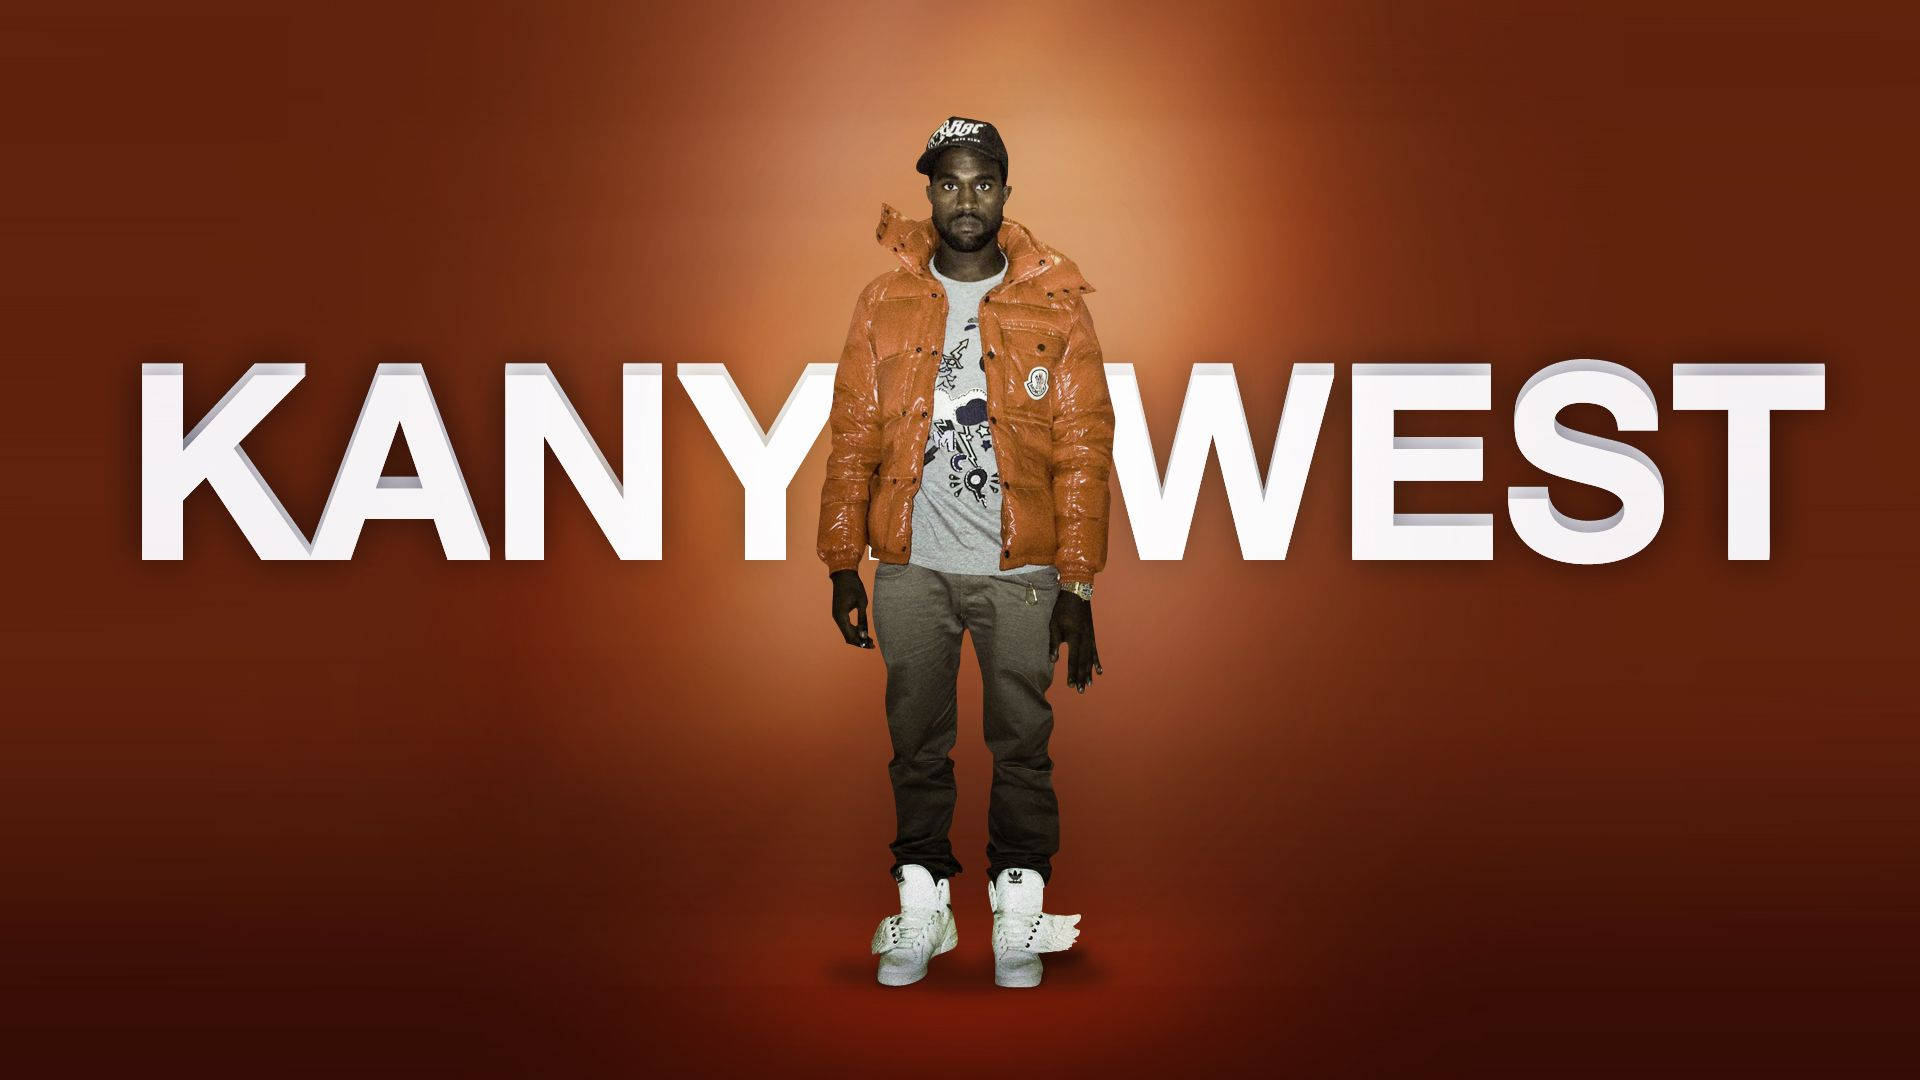 Kanye West On Brown Leather Jacket Background